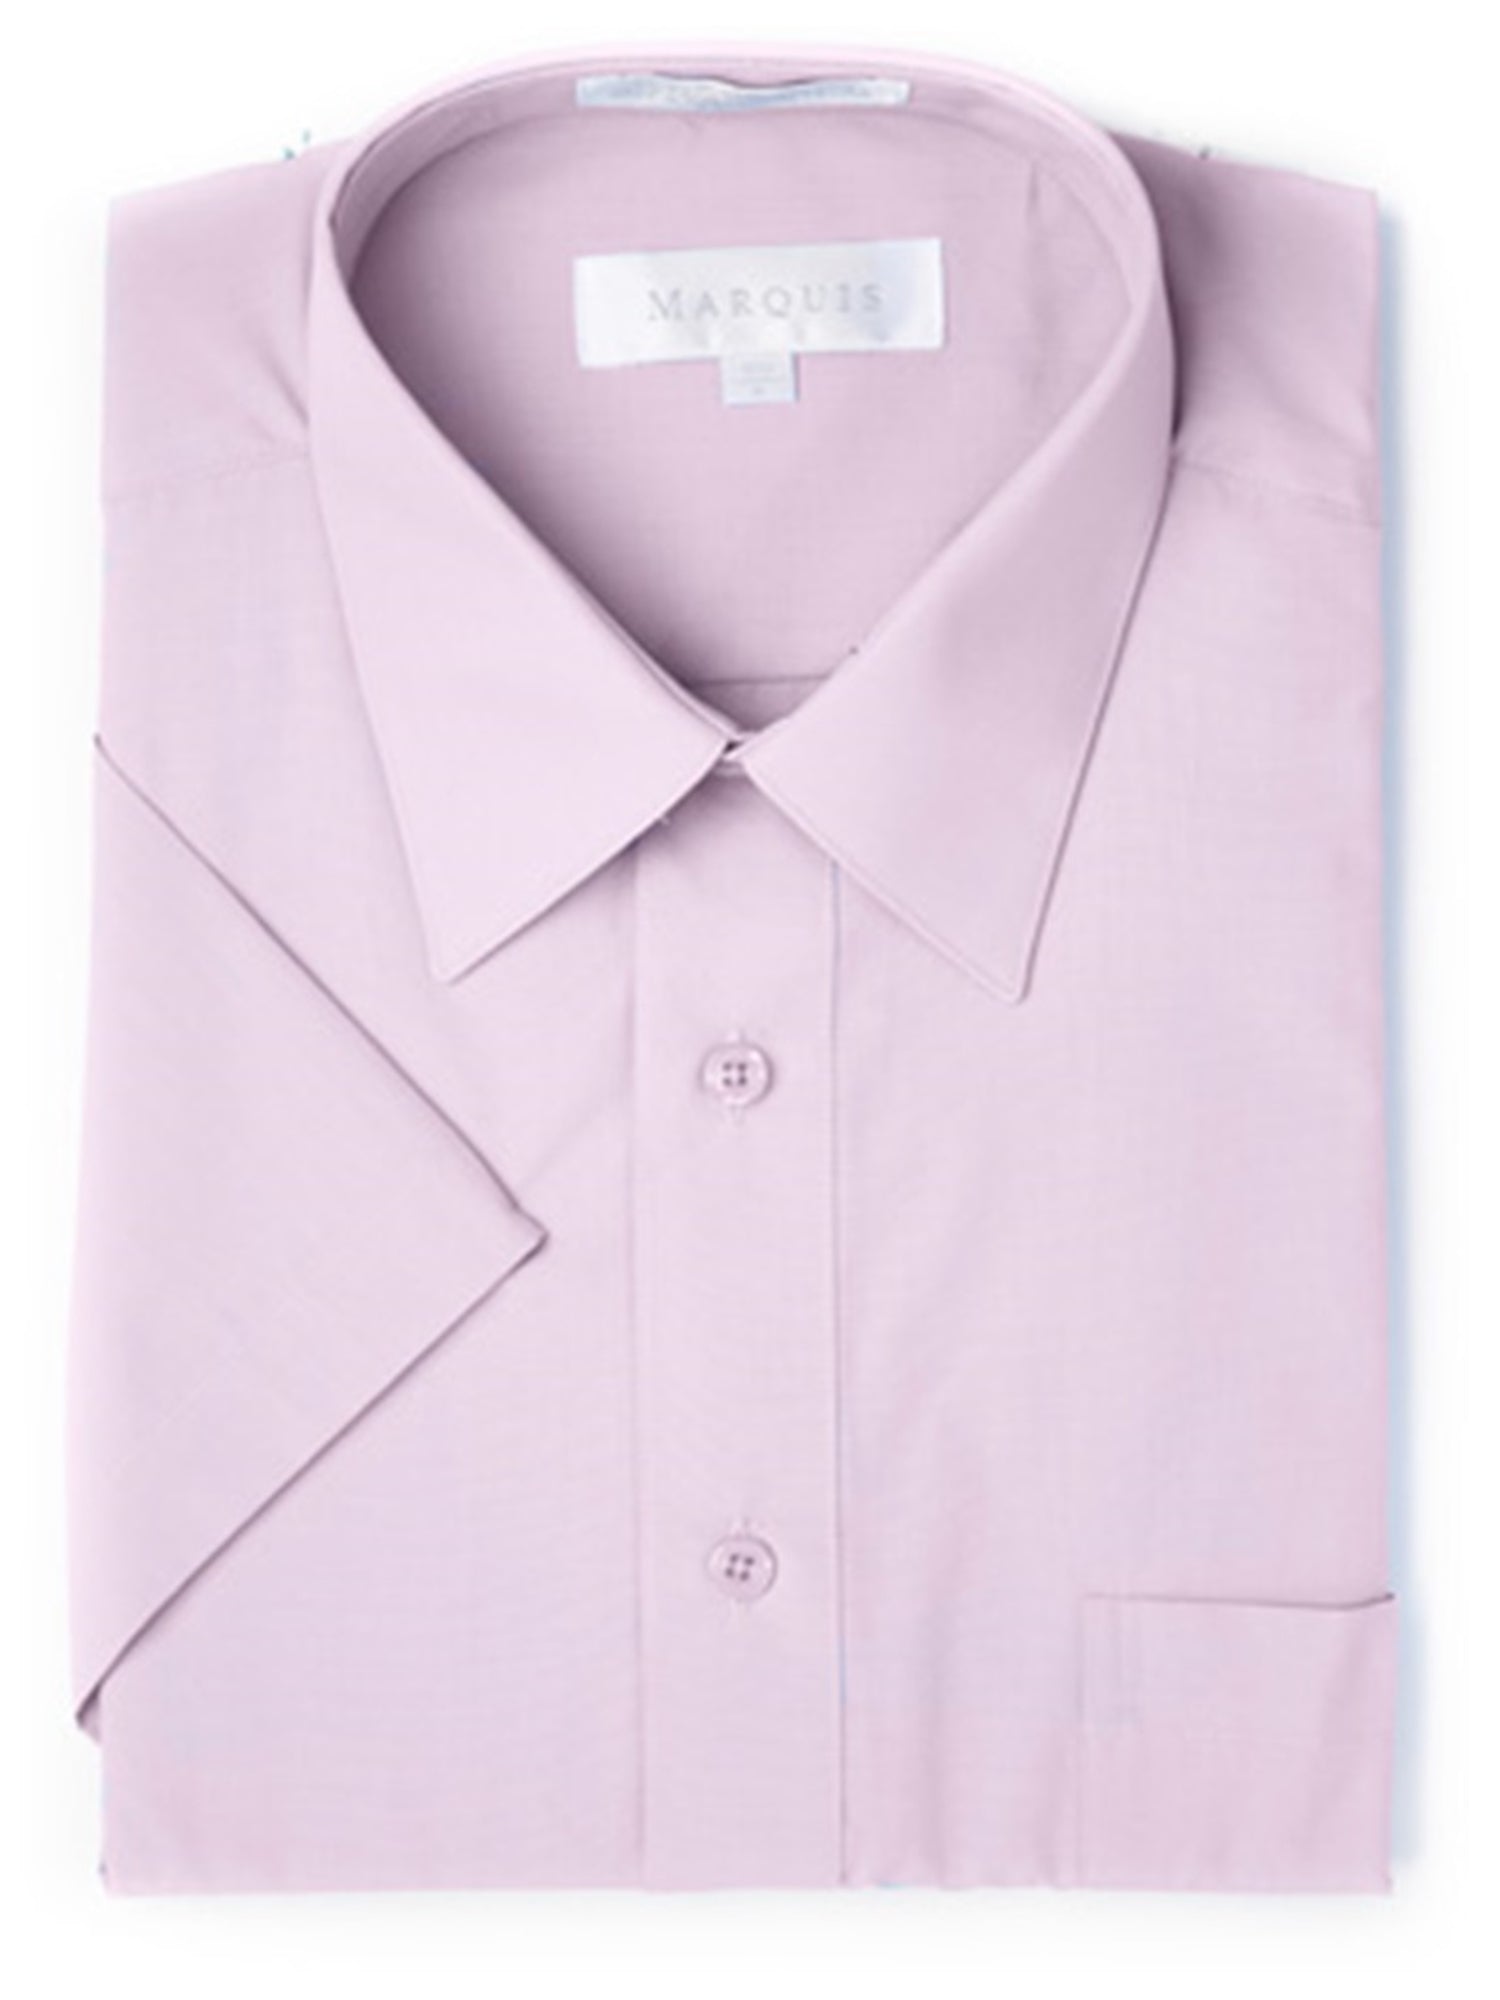 Marquis Men's Short Sleeve Regular Fit Dress Shirt - S To 4XL Men's Dress Shirts Marquis Lilac Small/14.5 